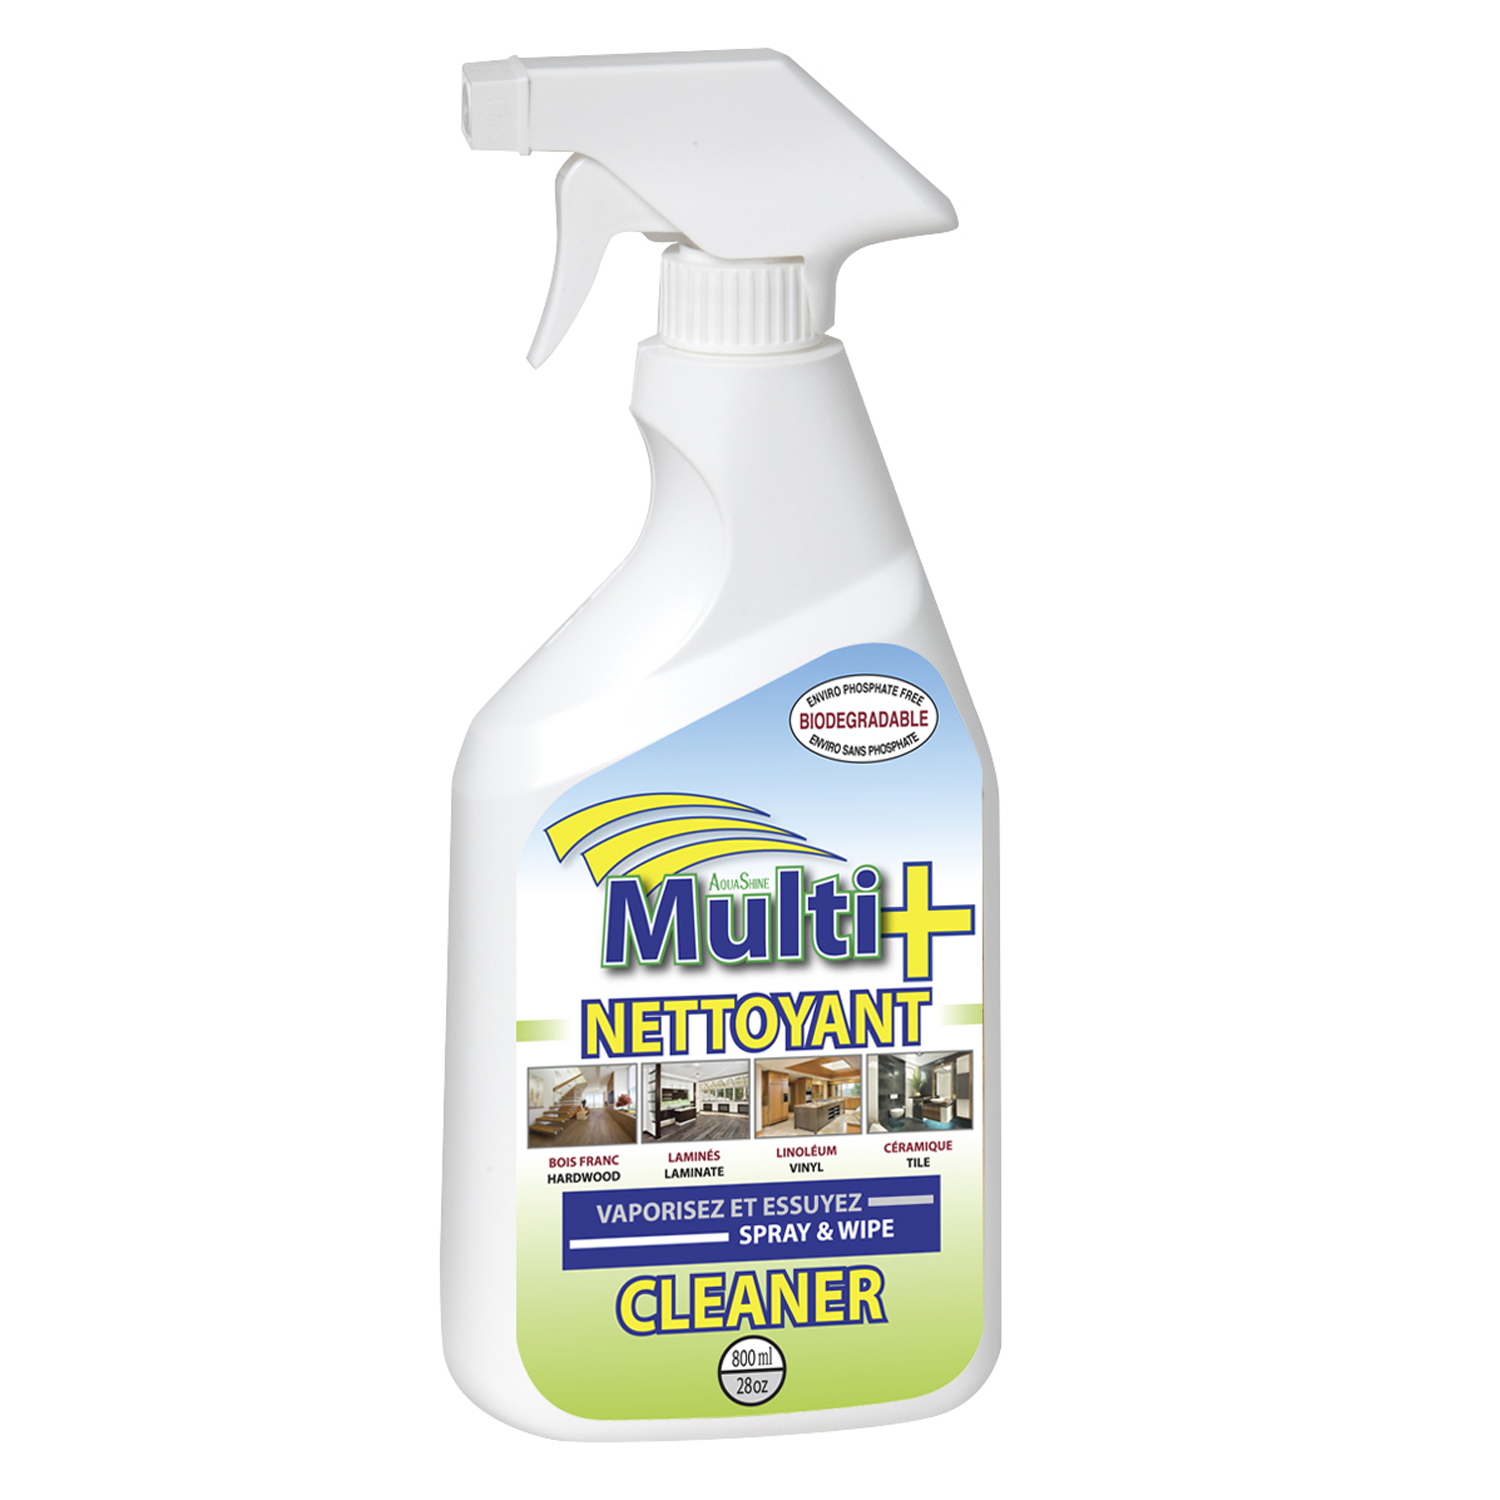 Multi antibacterial ready to use floor cleaner (43104) SamaN